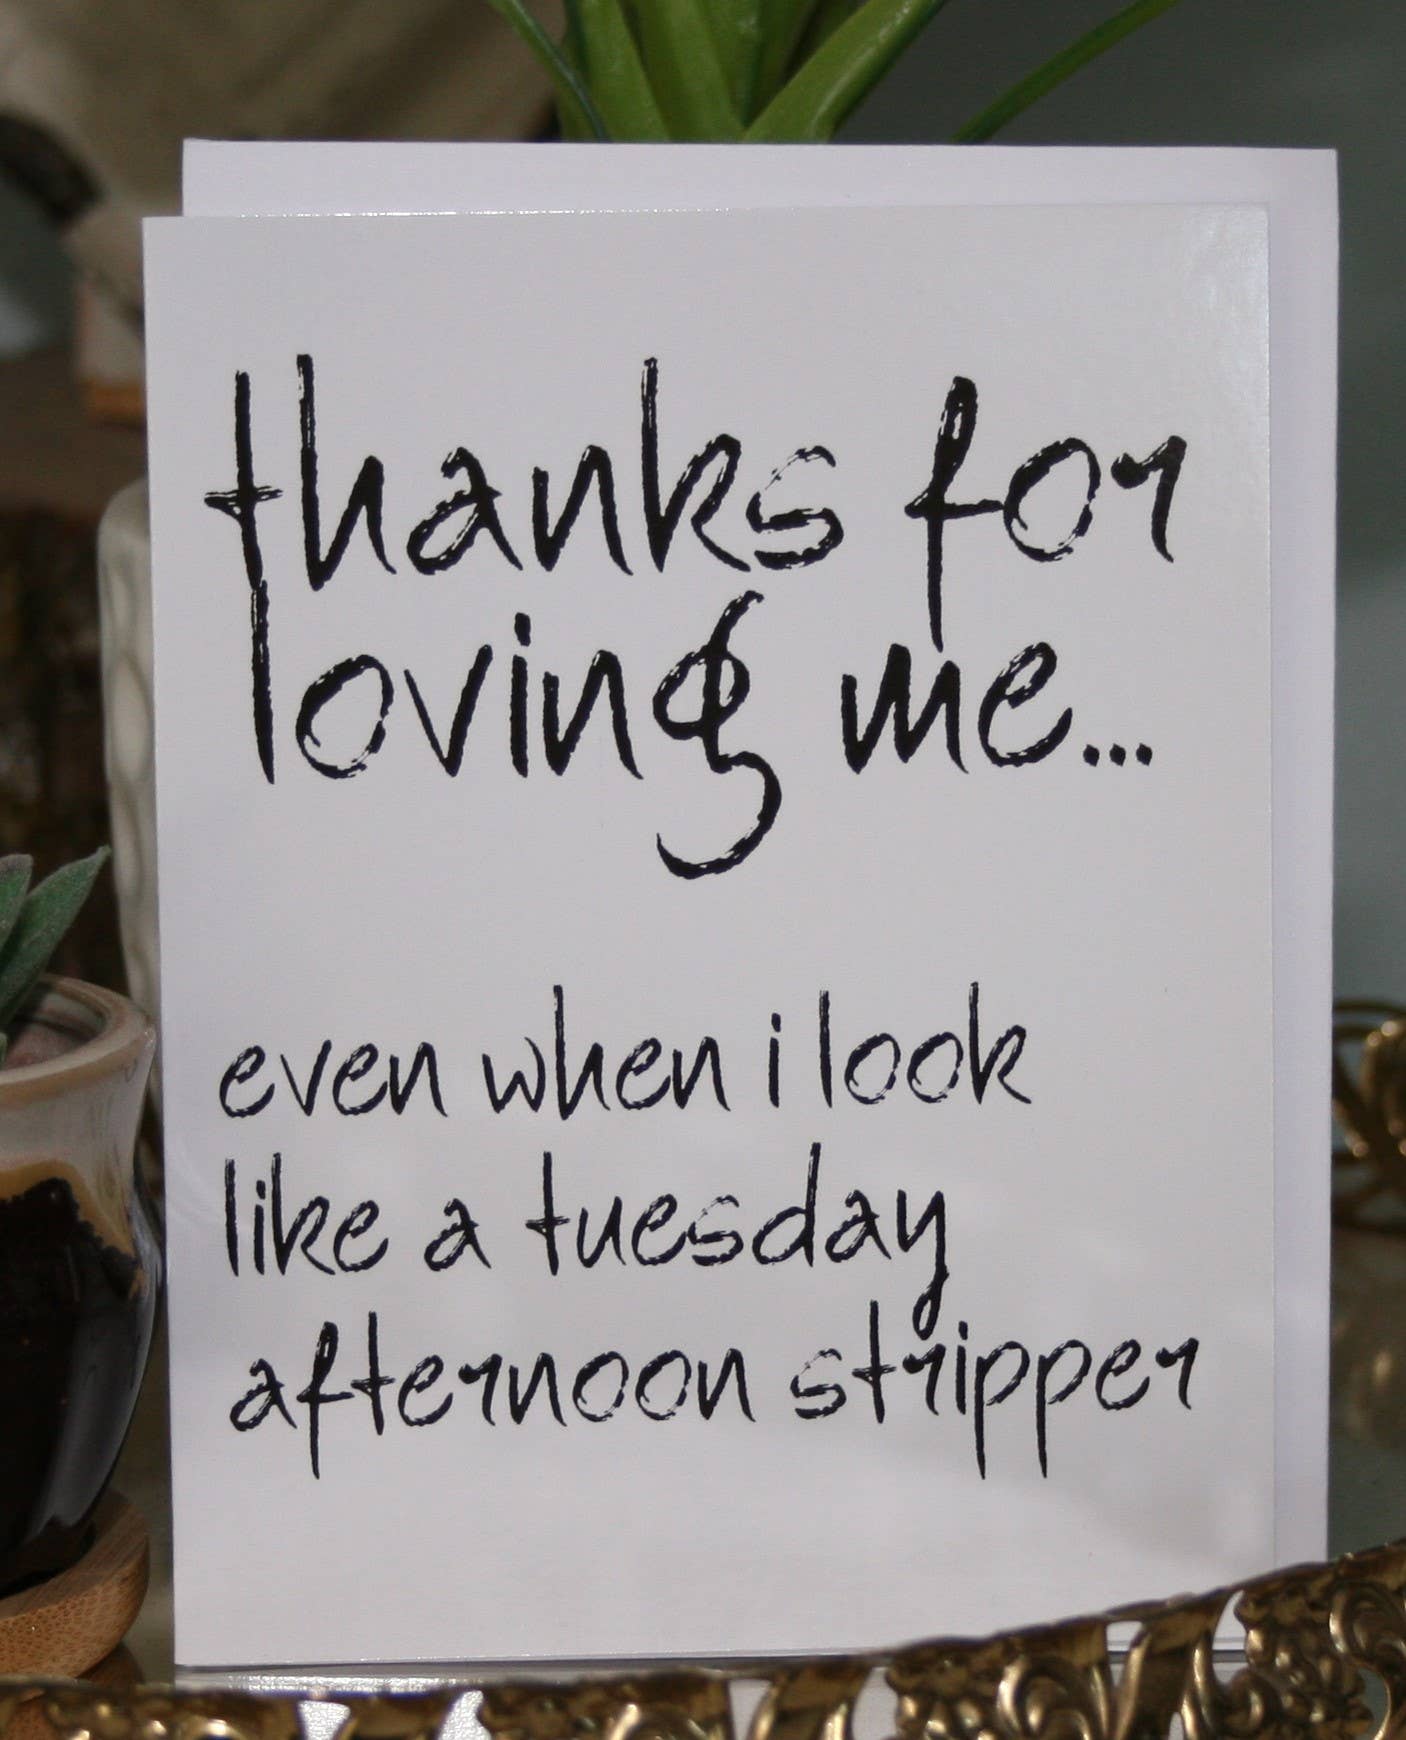 Tuesday Stripper Greeting Card